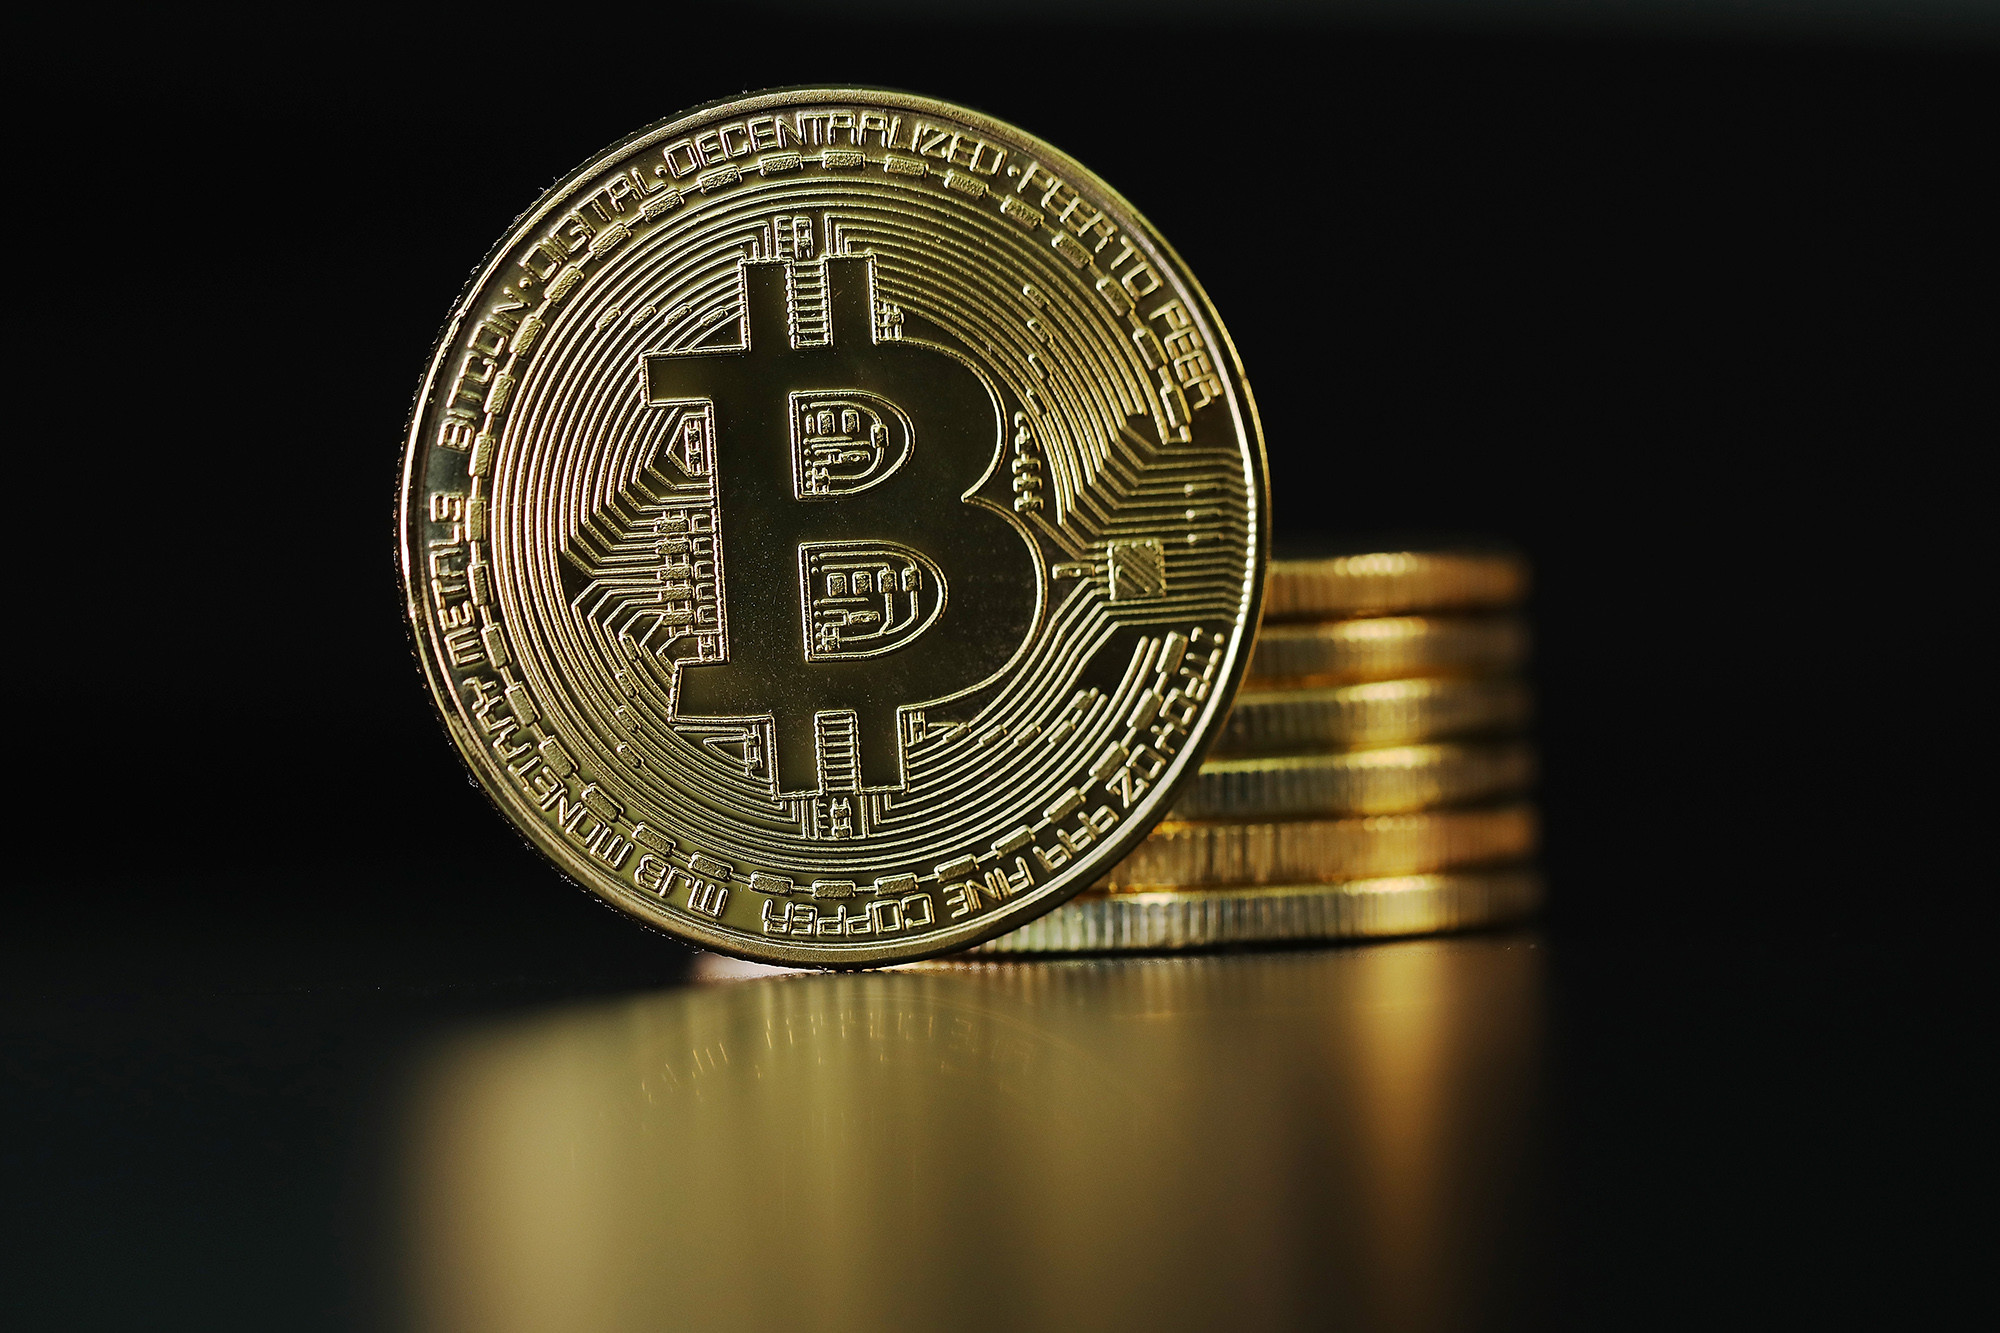 Bitcoin’s blockchain technology praised by Wall Street | New York Post